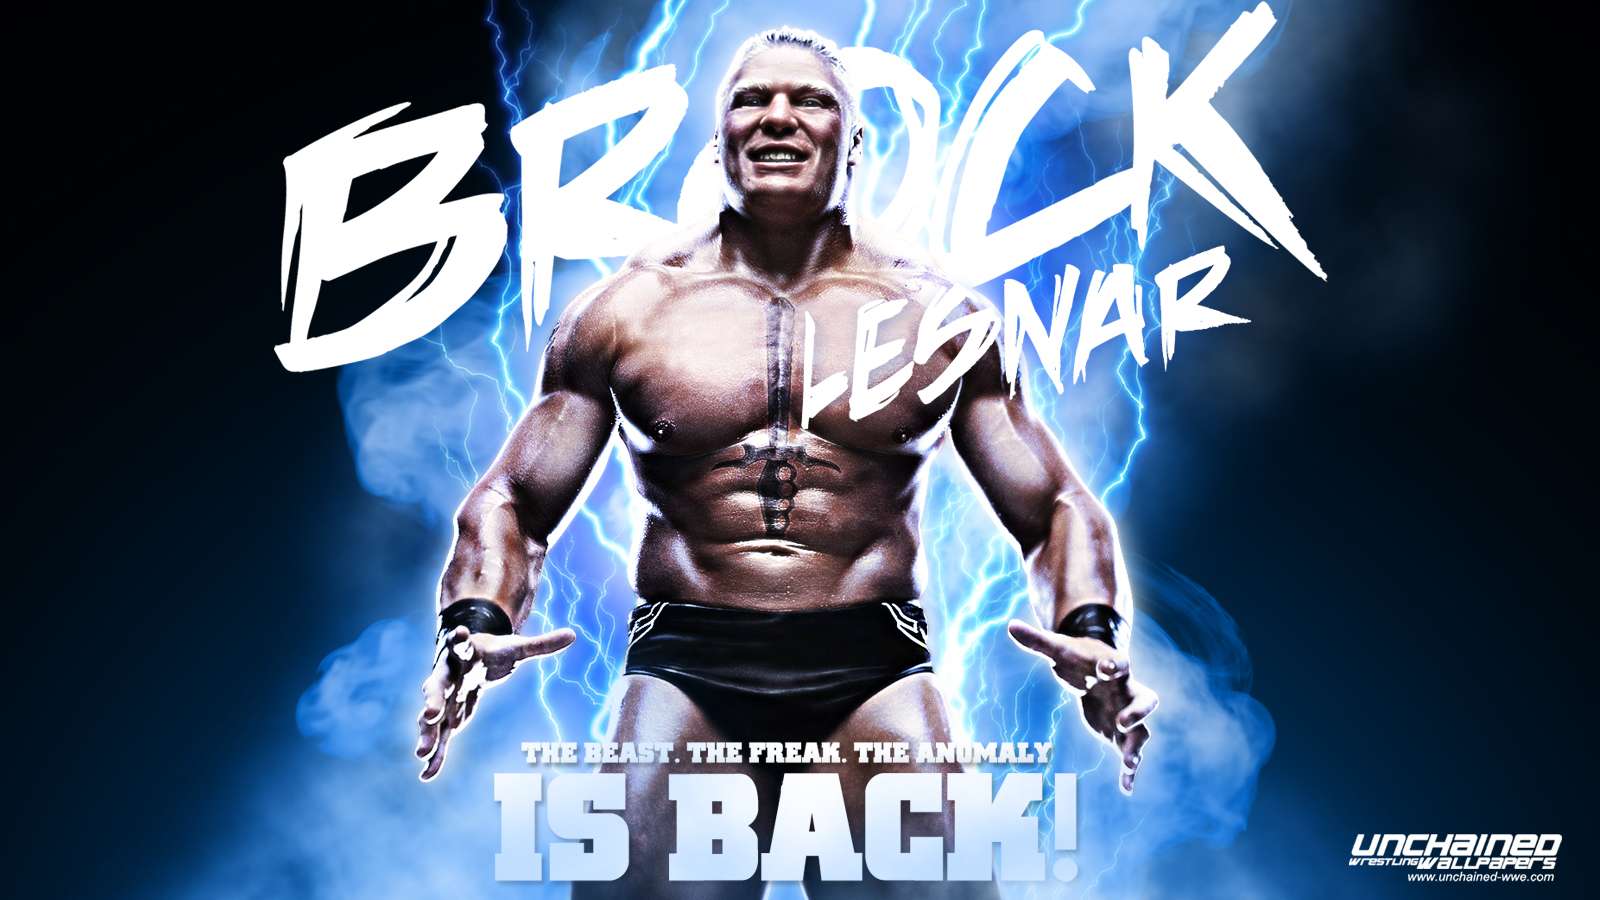 Brock Lesnar Wallpaper Best Collection Of WWE Wrestler